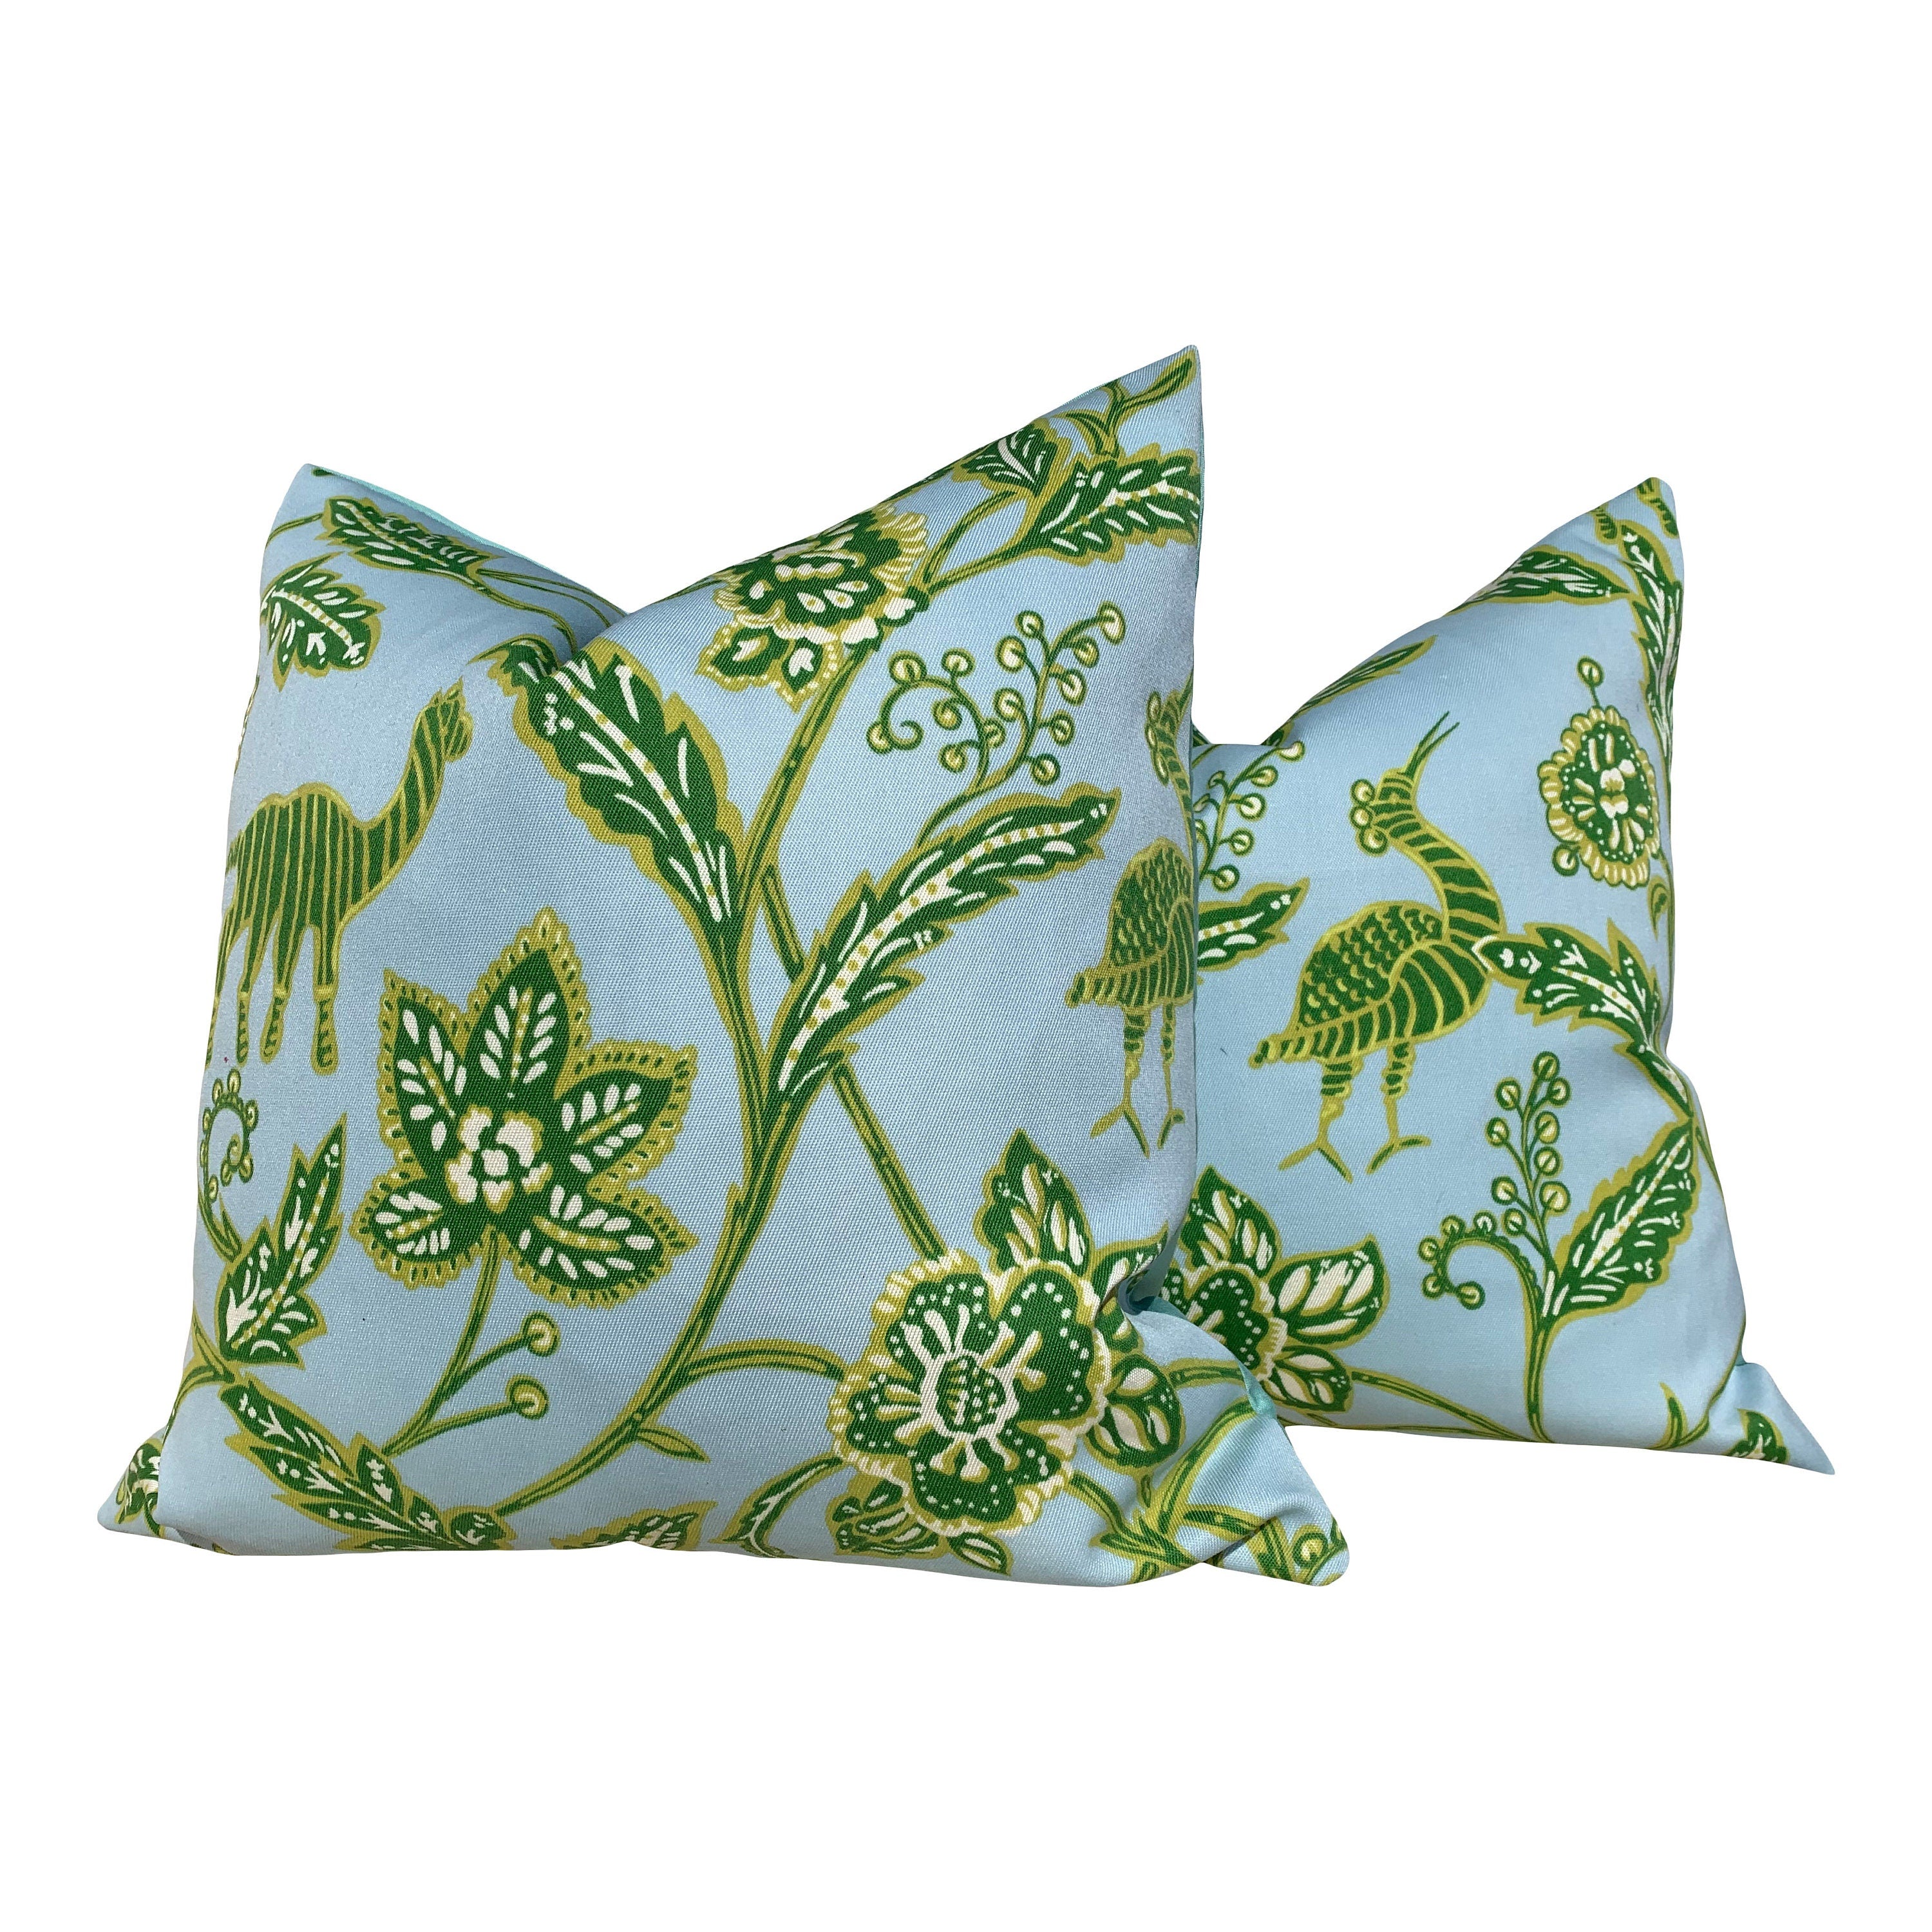 Thibaut Outdoor Goa Pillow in Aqua and Green. Decorative outdoor pillow Sunbrella Outdoor Pillow Cover Aqua Blue Accent Toss Throw